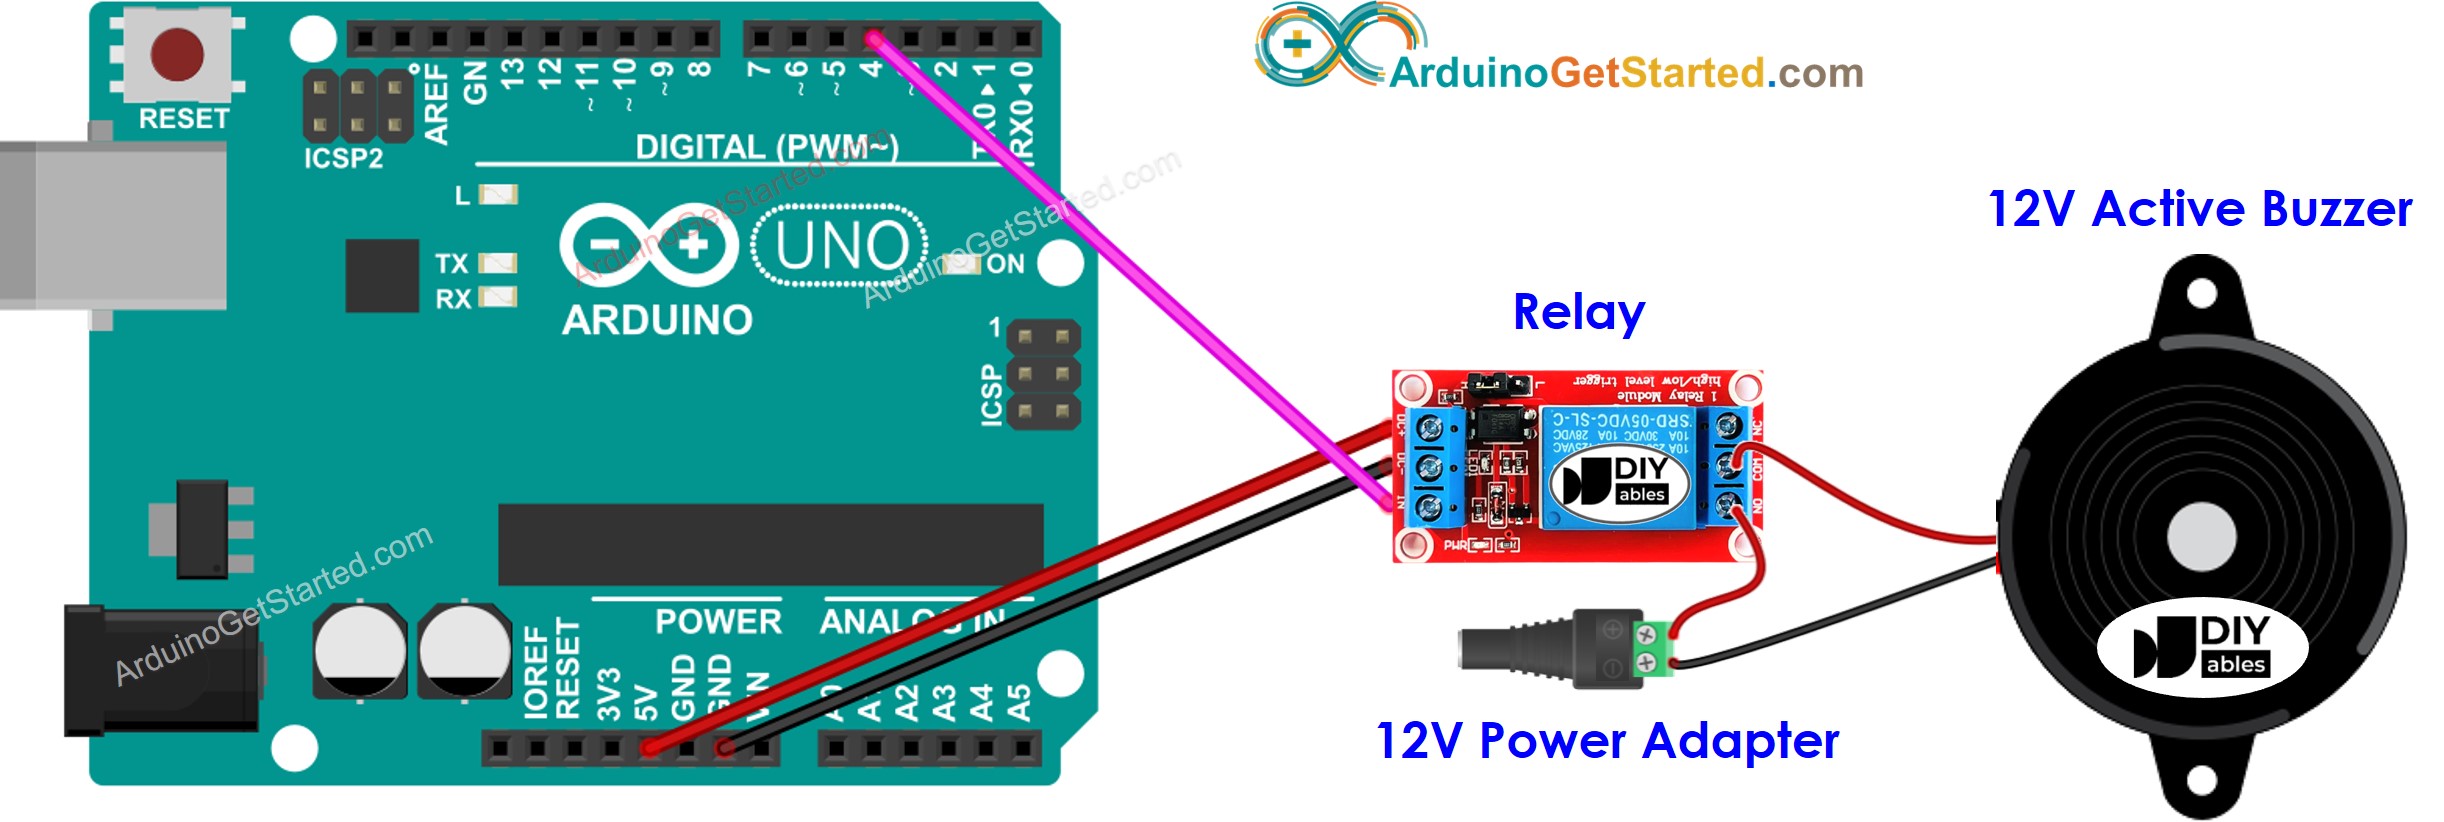 Schéma de câblage du buzzer actif 12V Arduino